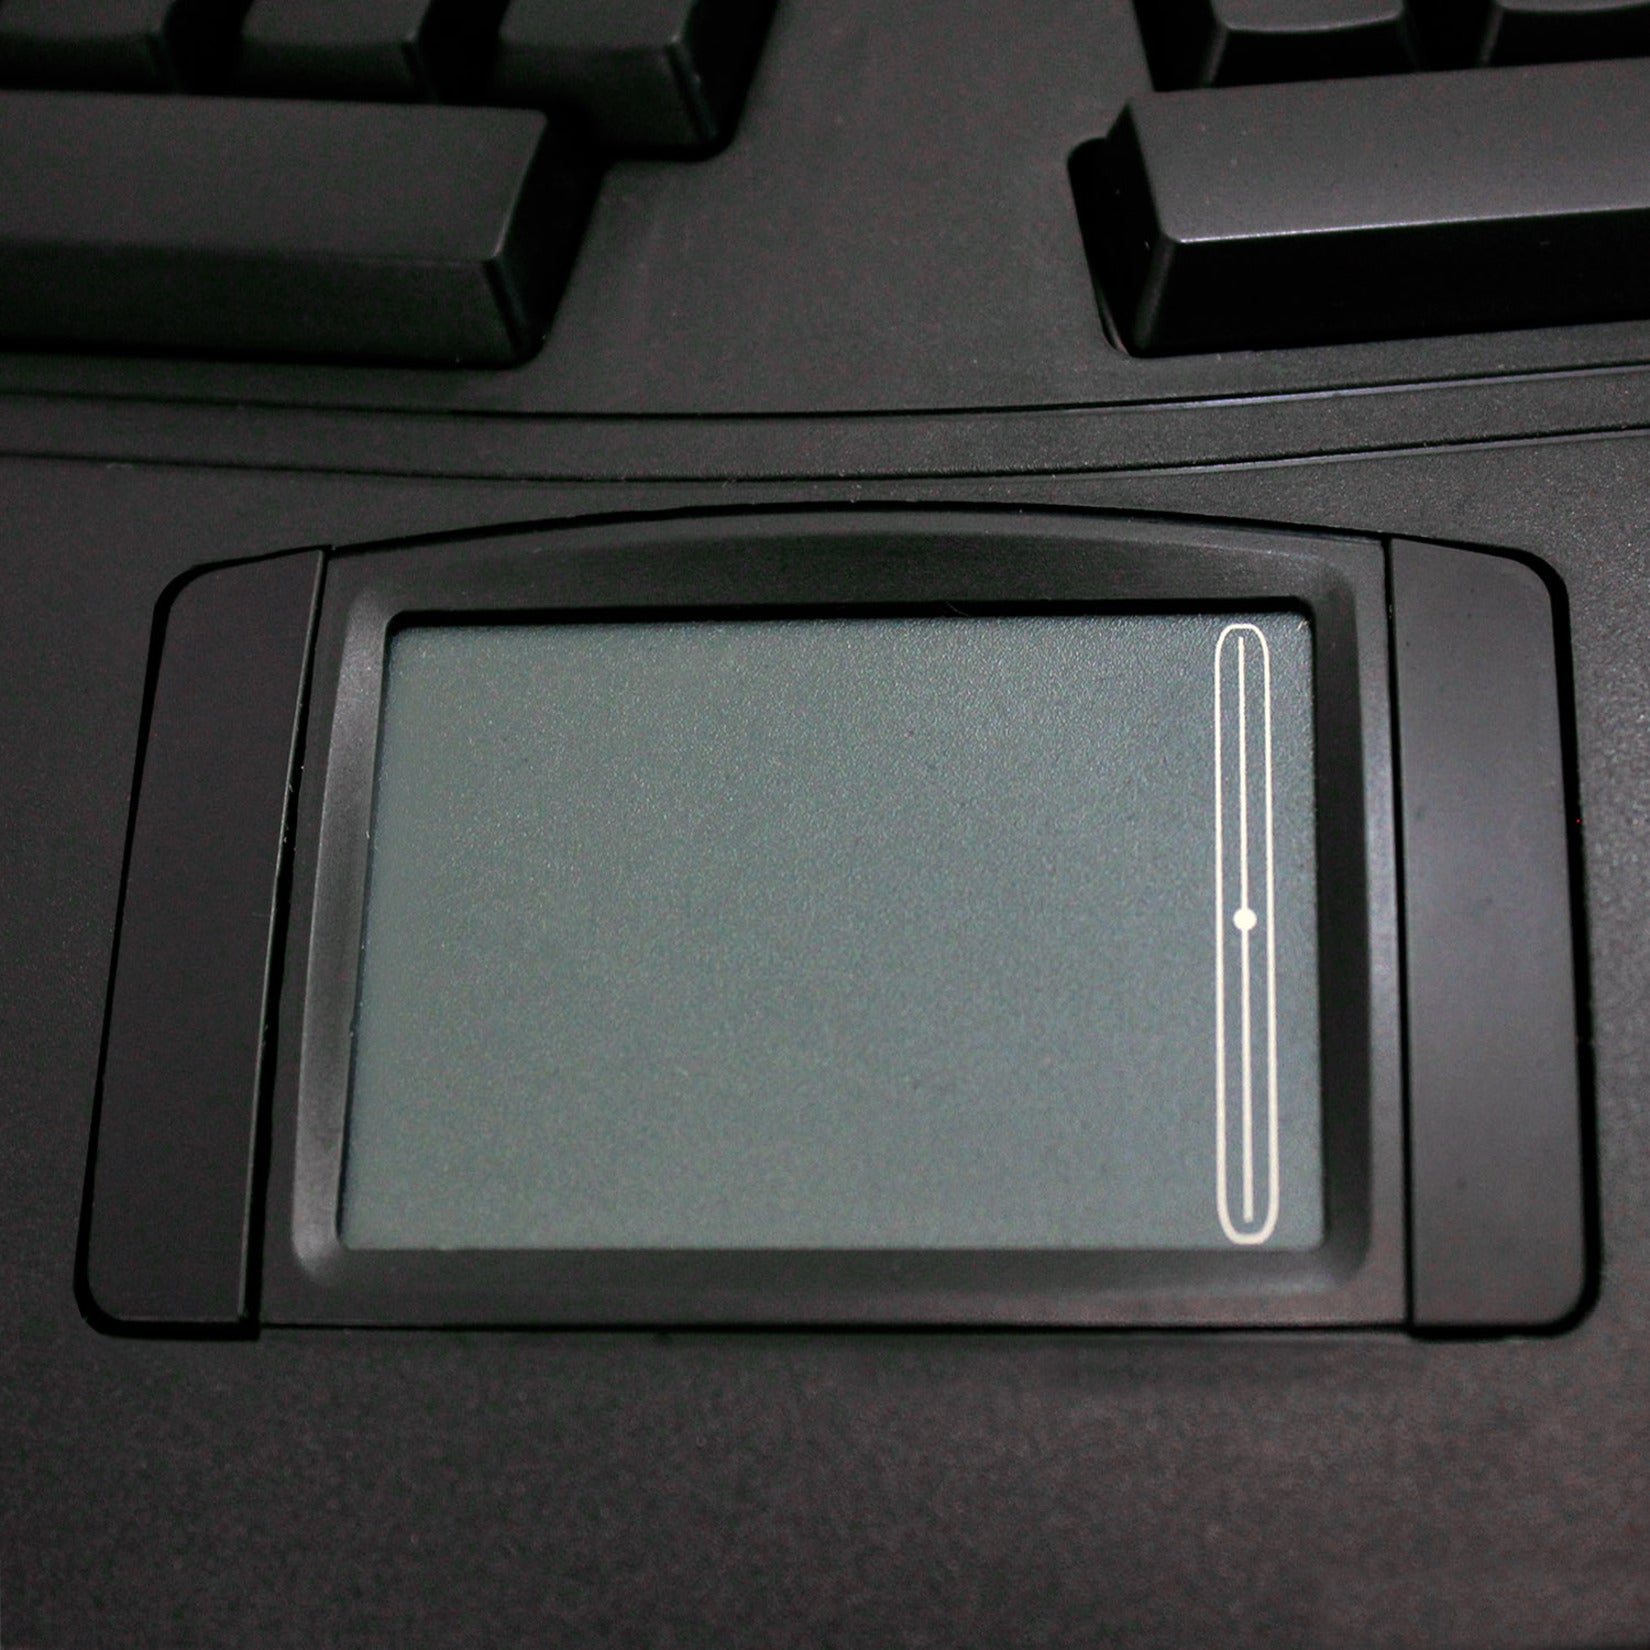 Adesso AKB-450UB Tru-Form Ergonomic Touchpad Keyboard, Split Layout, Quiet Keys, Palm Rest, Ergonomic Design